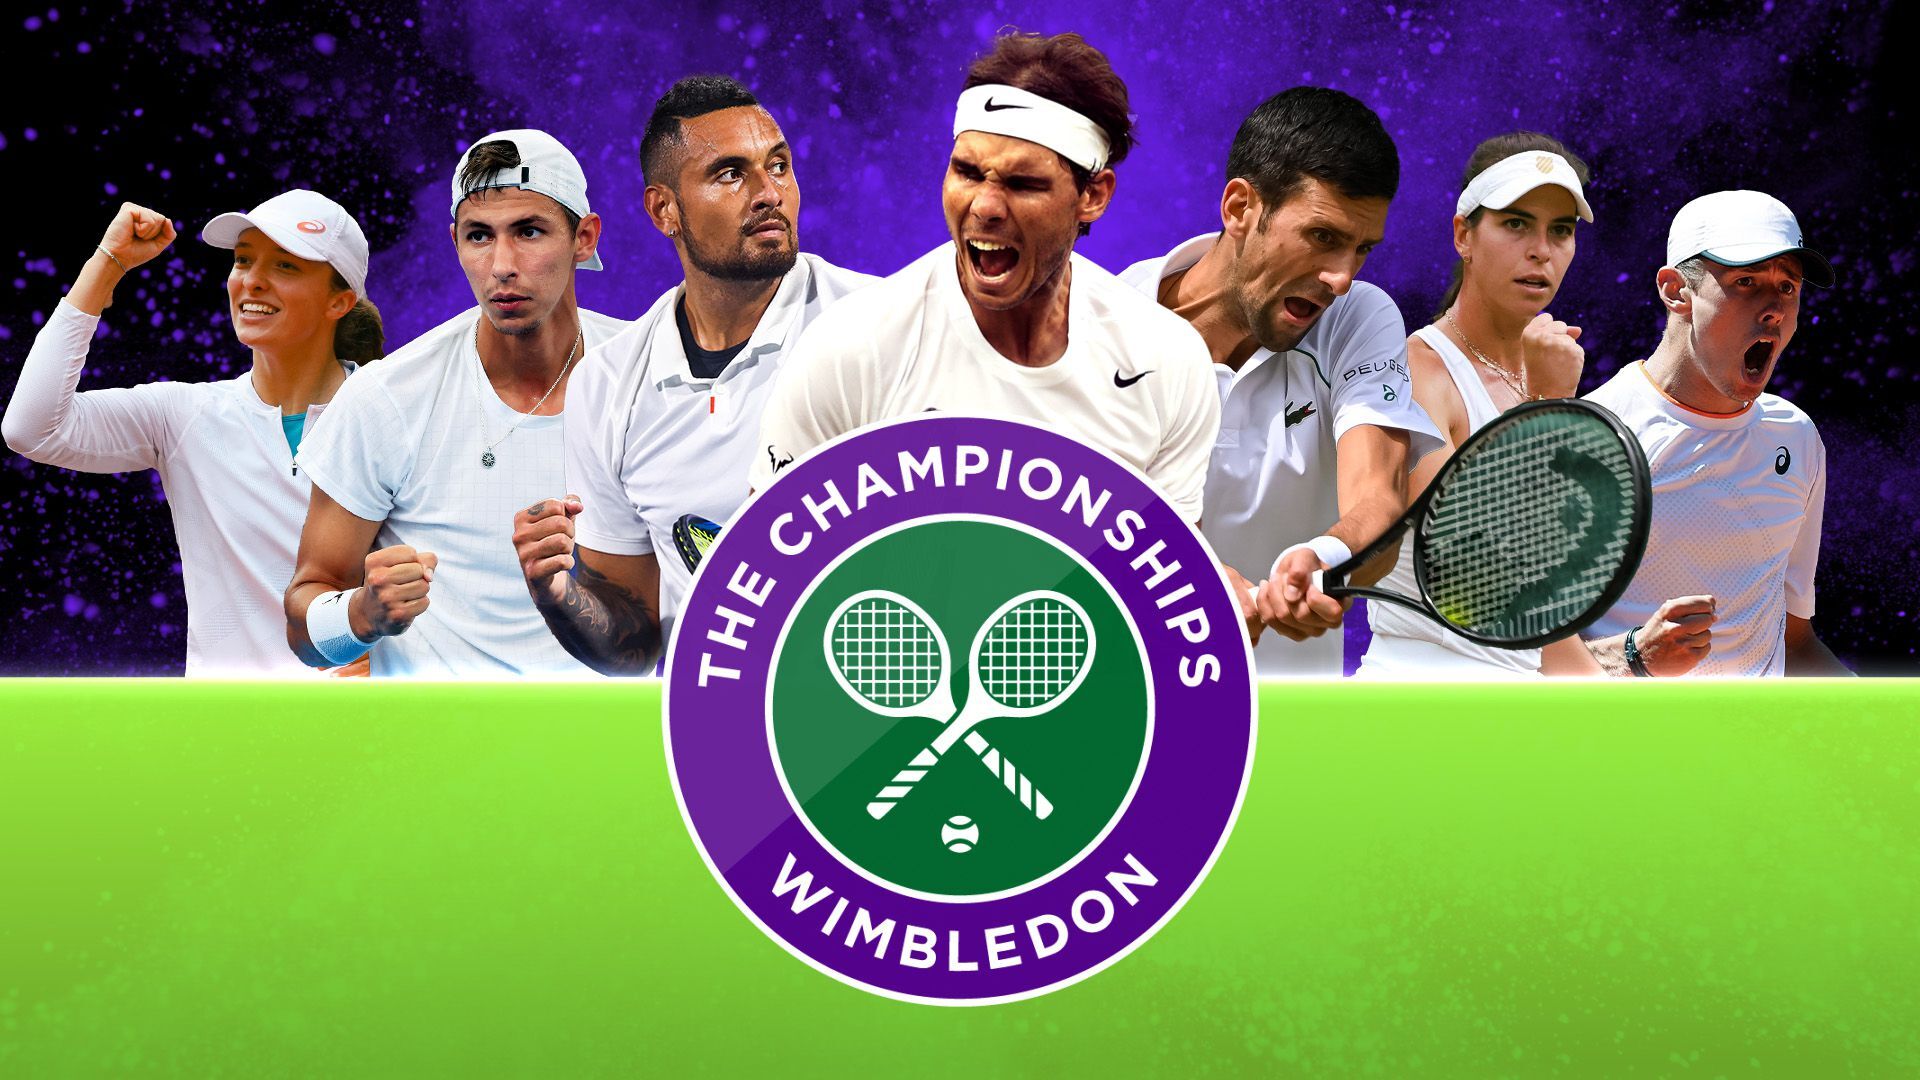 Wimbledon Championships 2022 Schedule